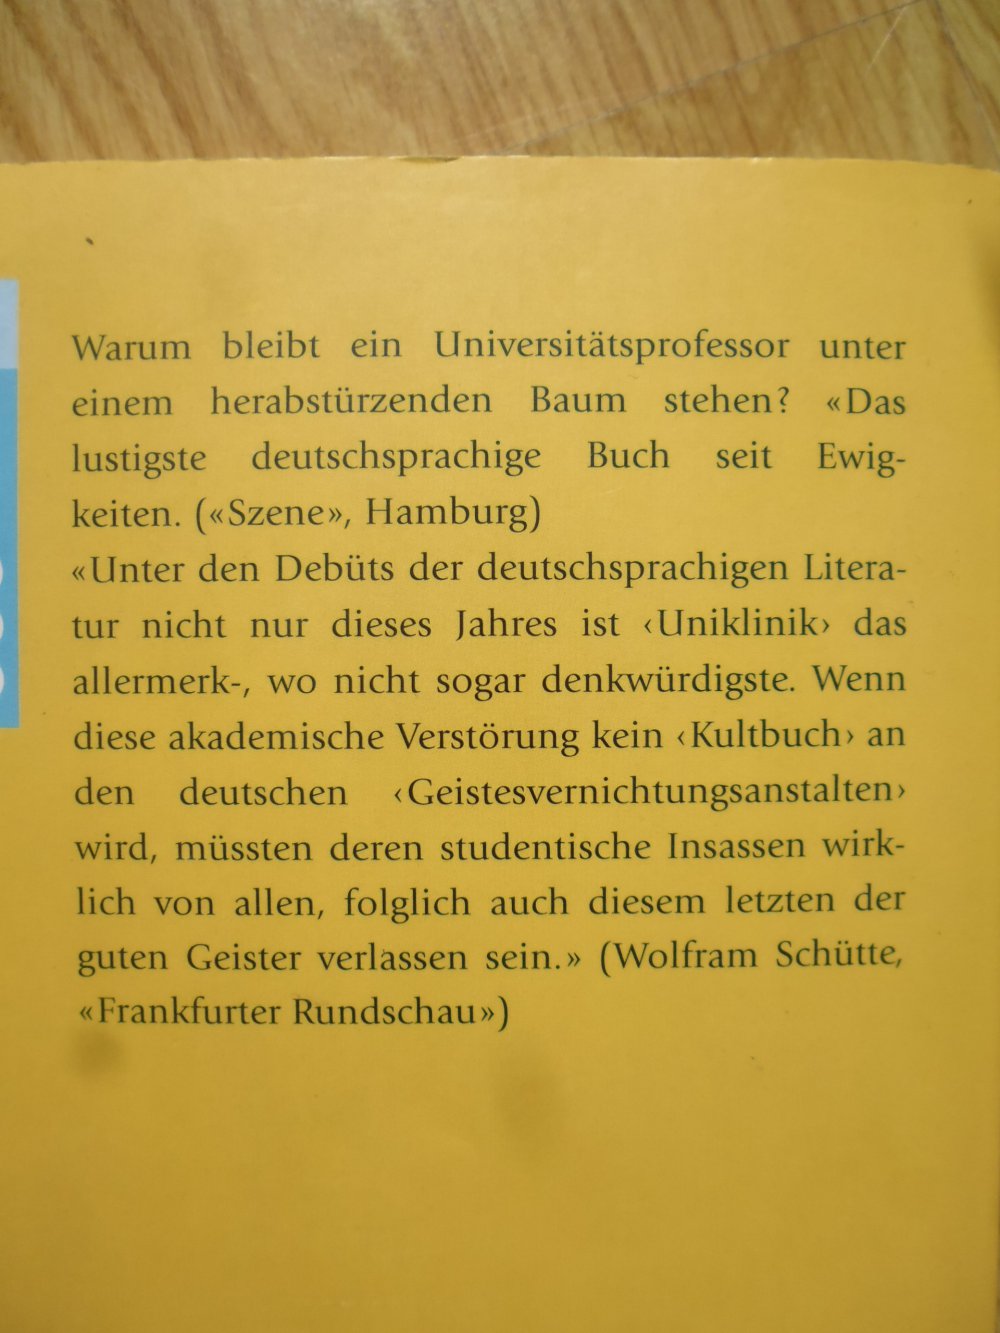 Buch Jörg Uwe Sauer - Uniklinik